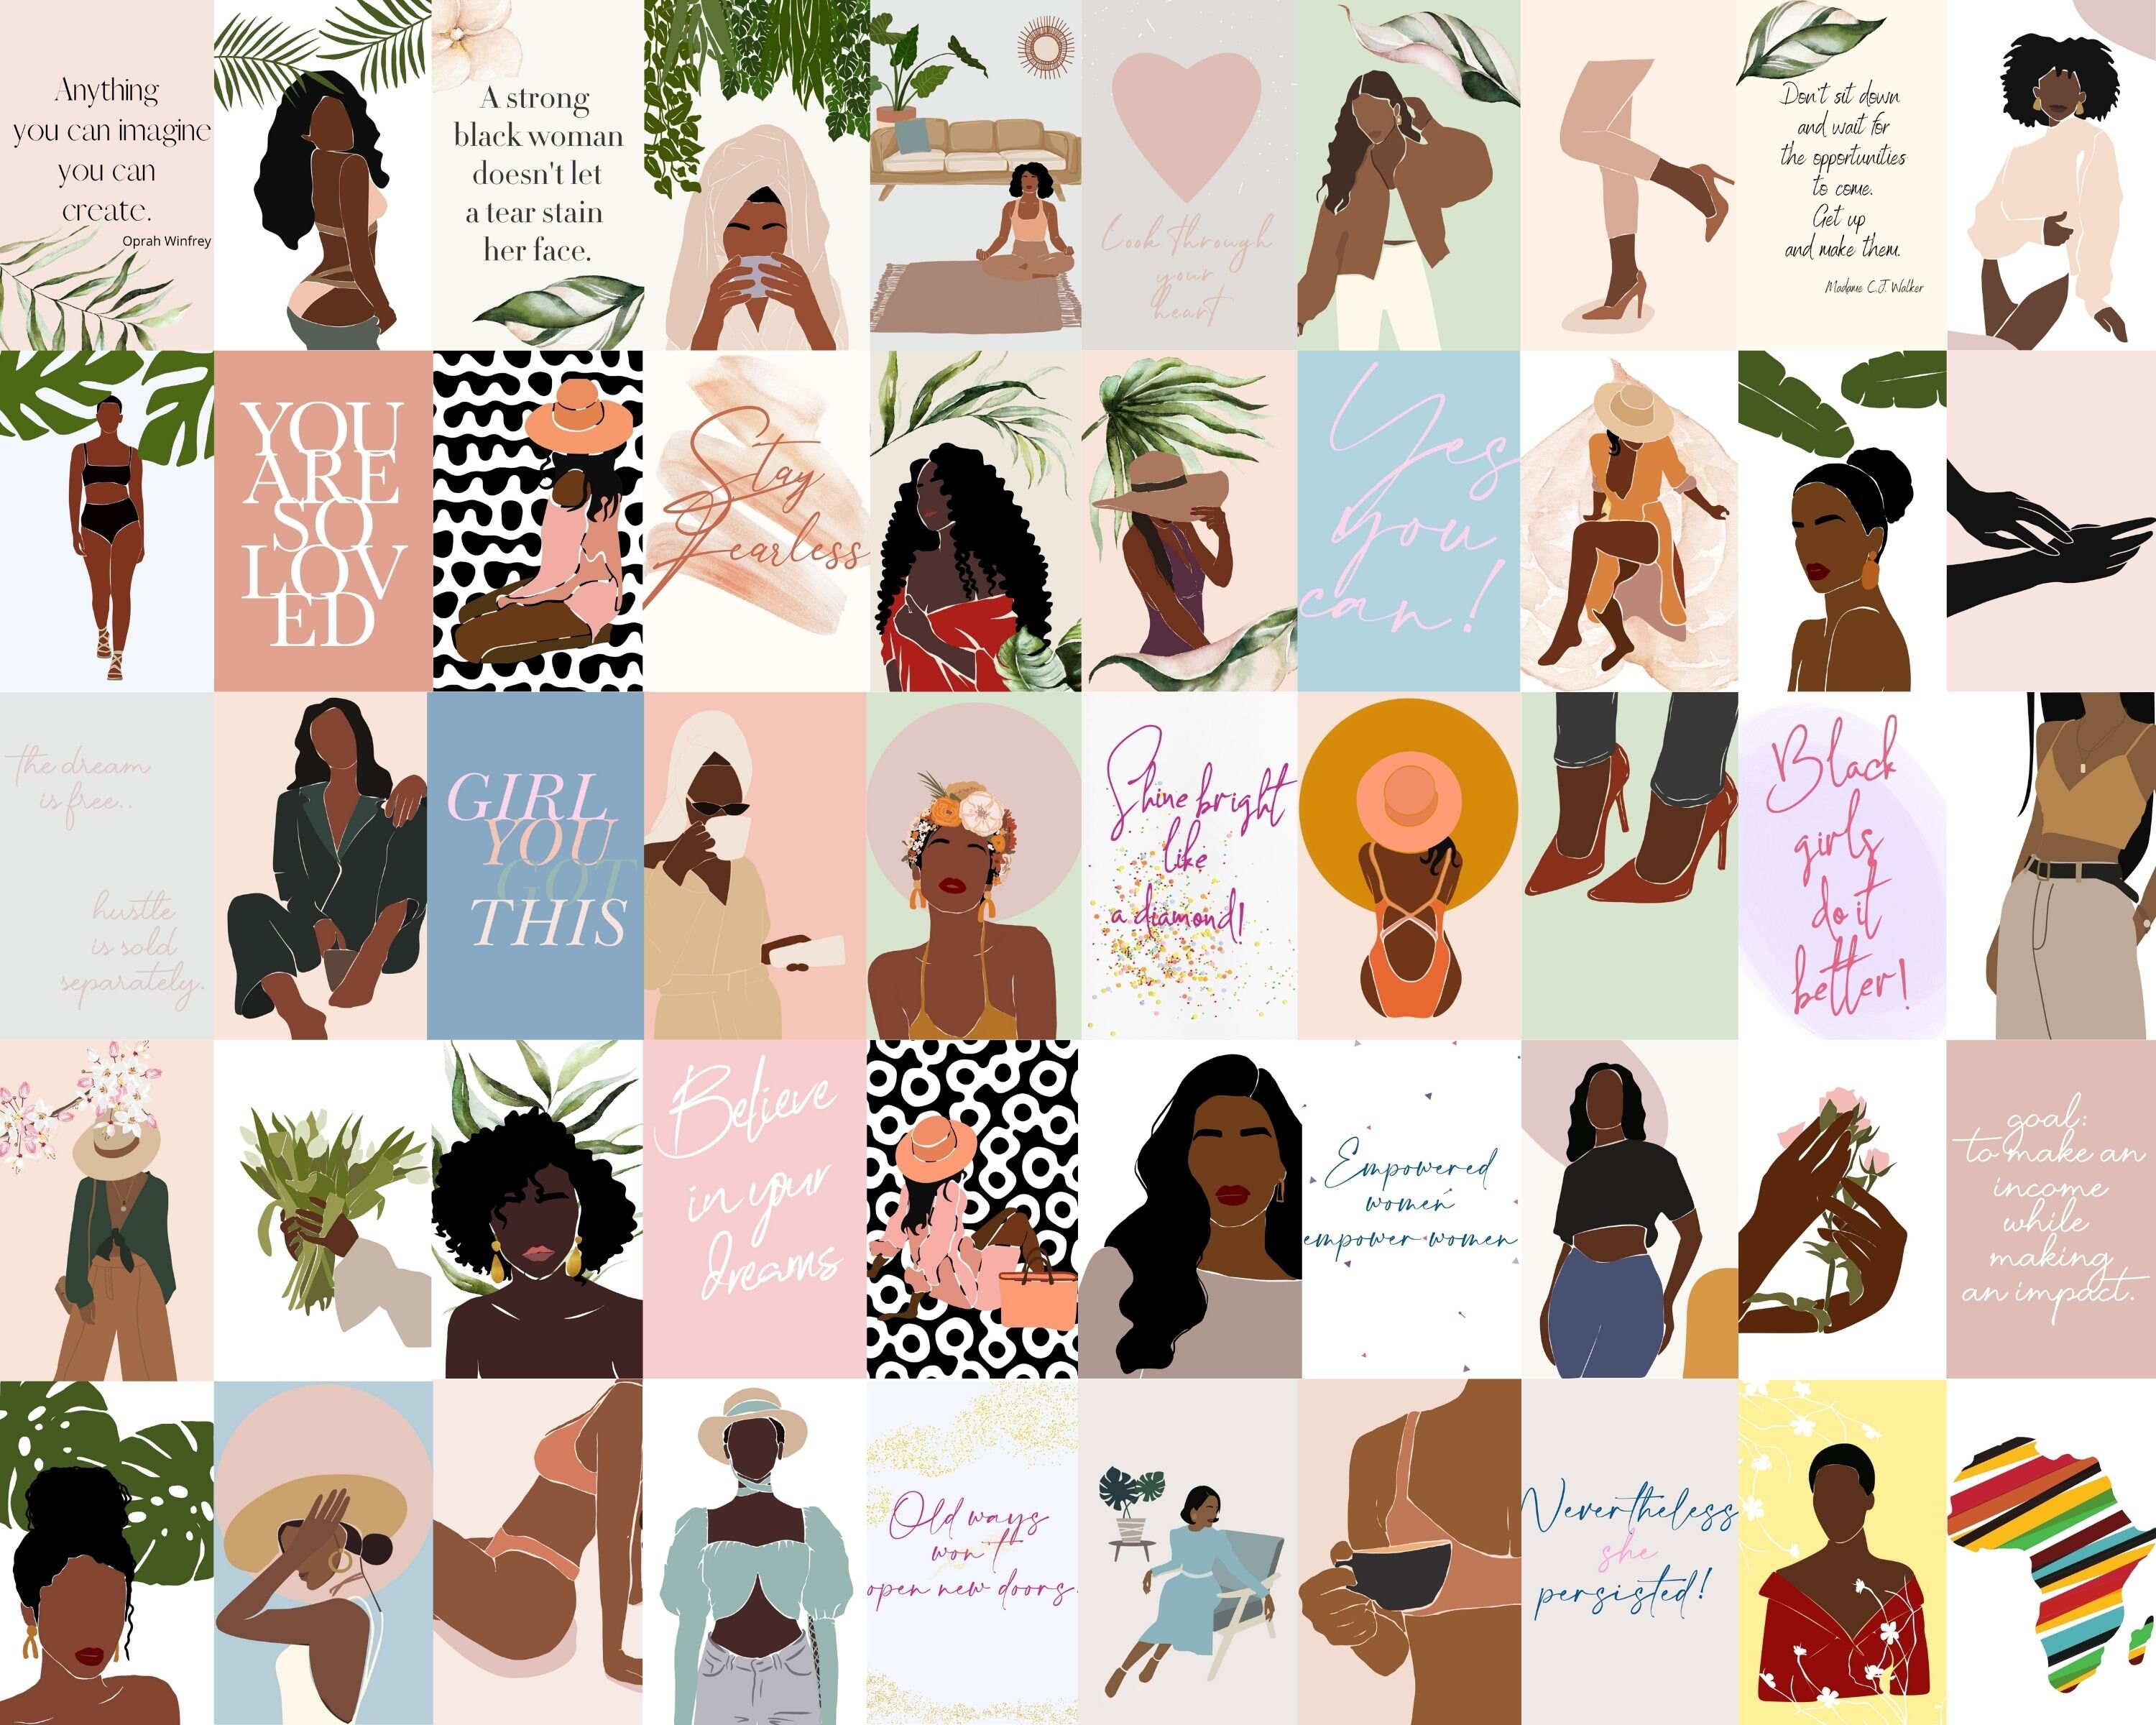 Modern black woman collage kit 150 photos black girl boss | Etsy